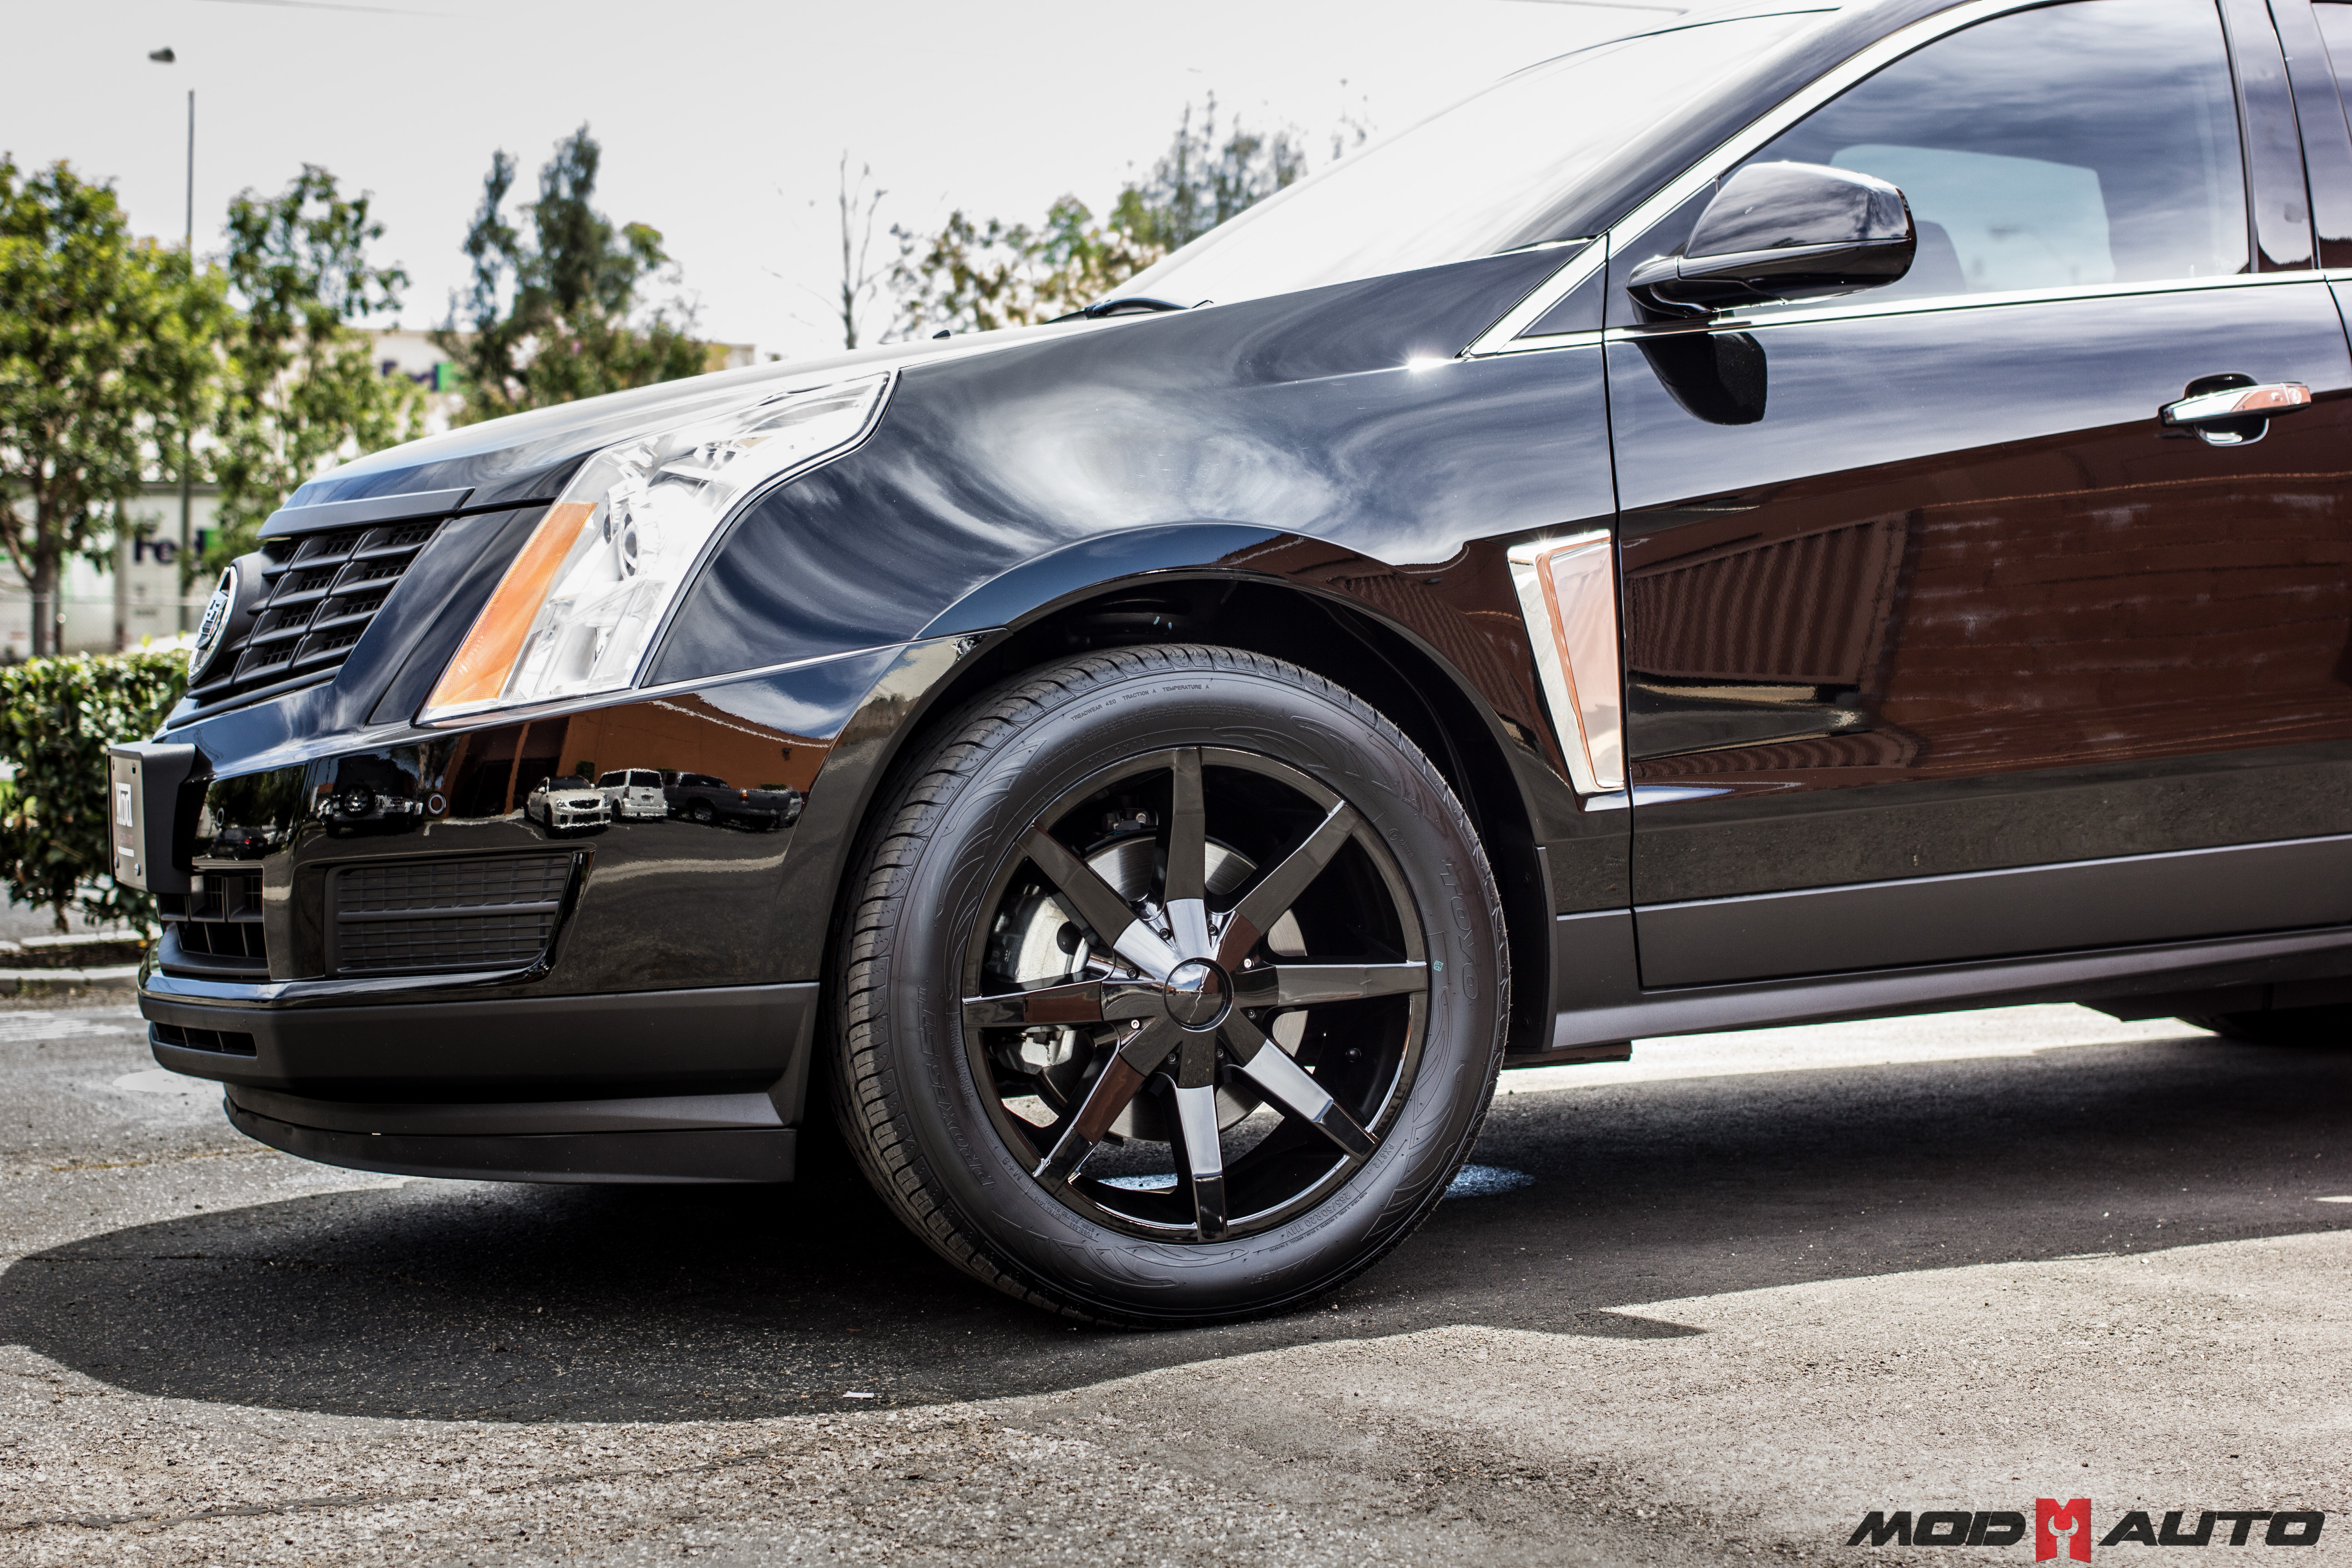 2015 Cadillac SRX on 20″ KMC Slide 651 Gloss Black Wheels | Mod Auto